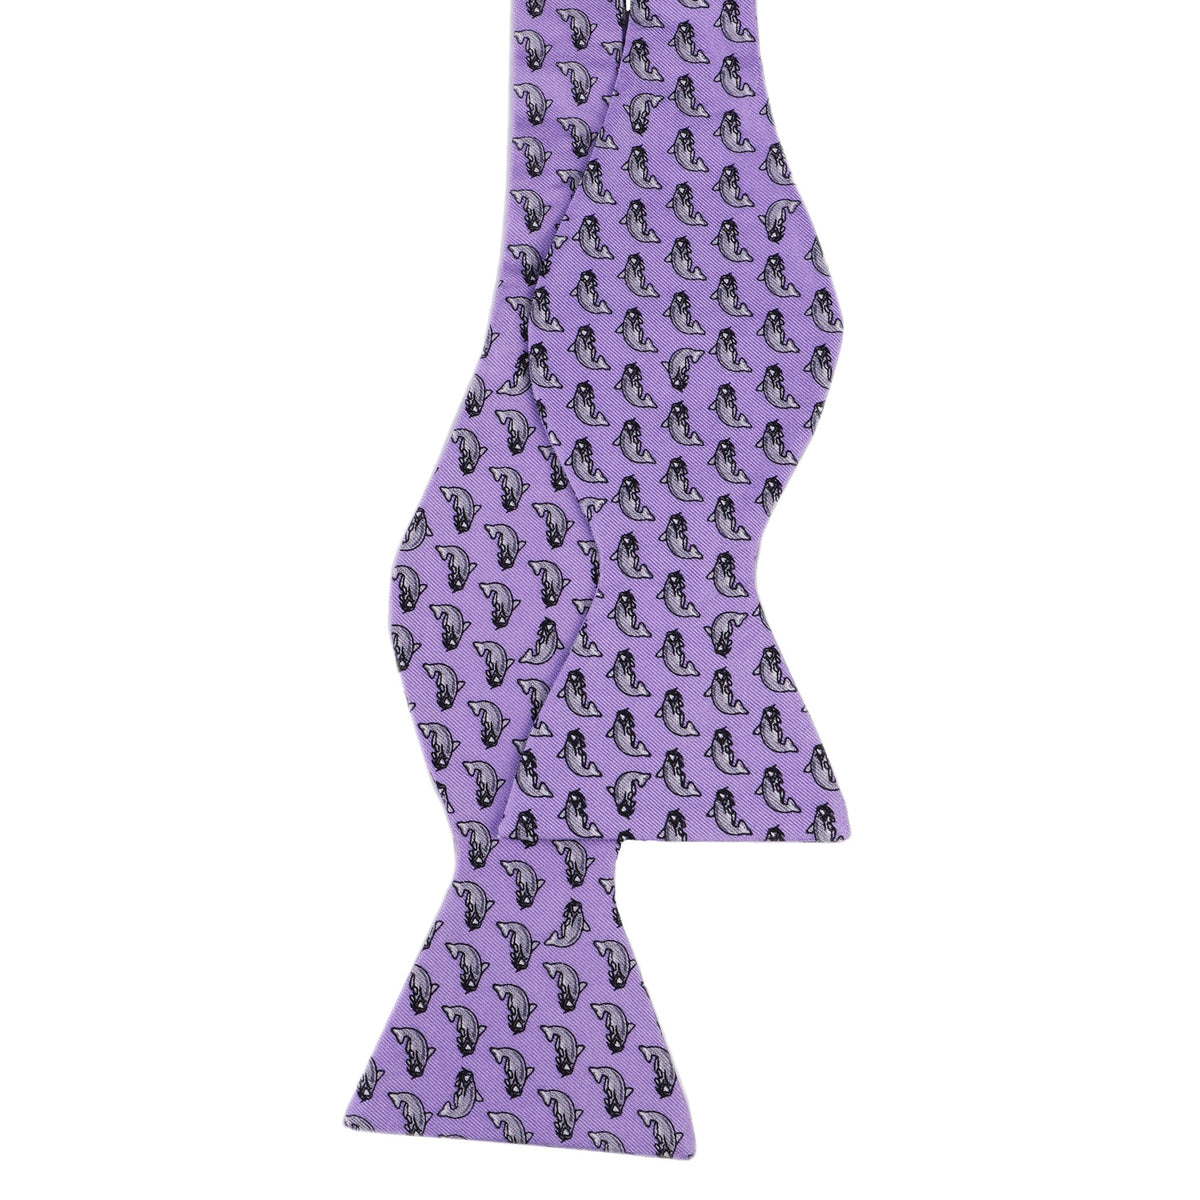 Limited Edition NOLA Couture X Haspel Lavendar Catfish Print Bow Tie - O/S